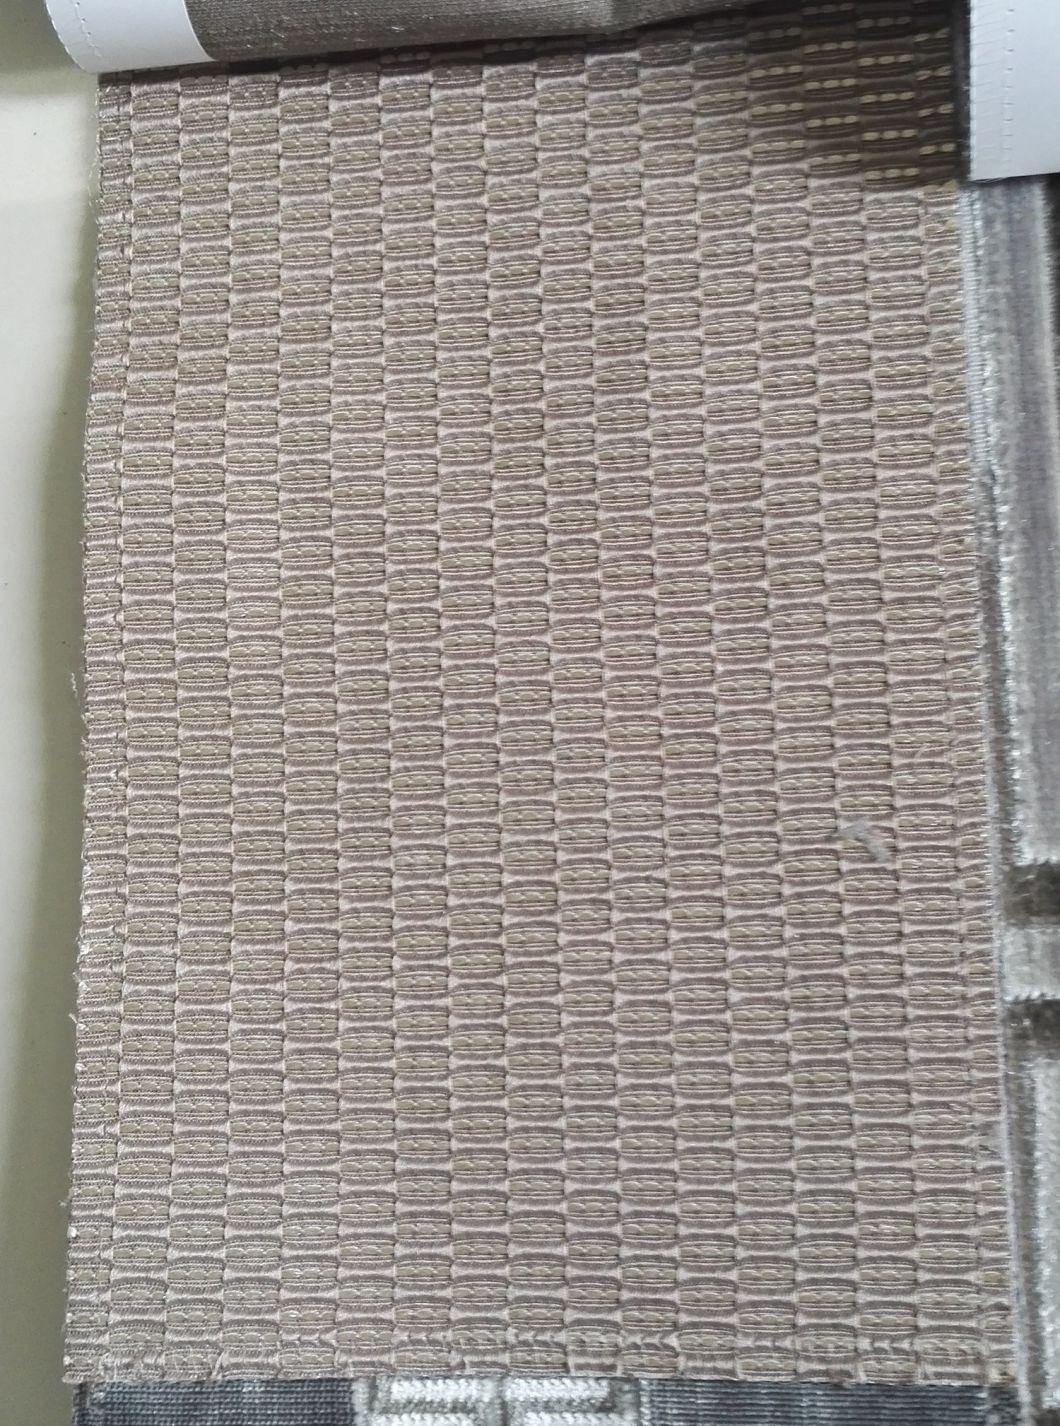 Home Textiles Cut Velvet Terciopelo Upholstery Honeycomb Jacquard Cushion Almohada Fabric